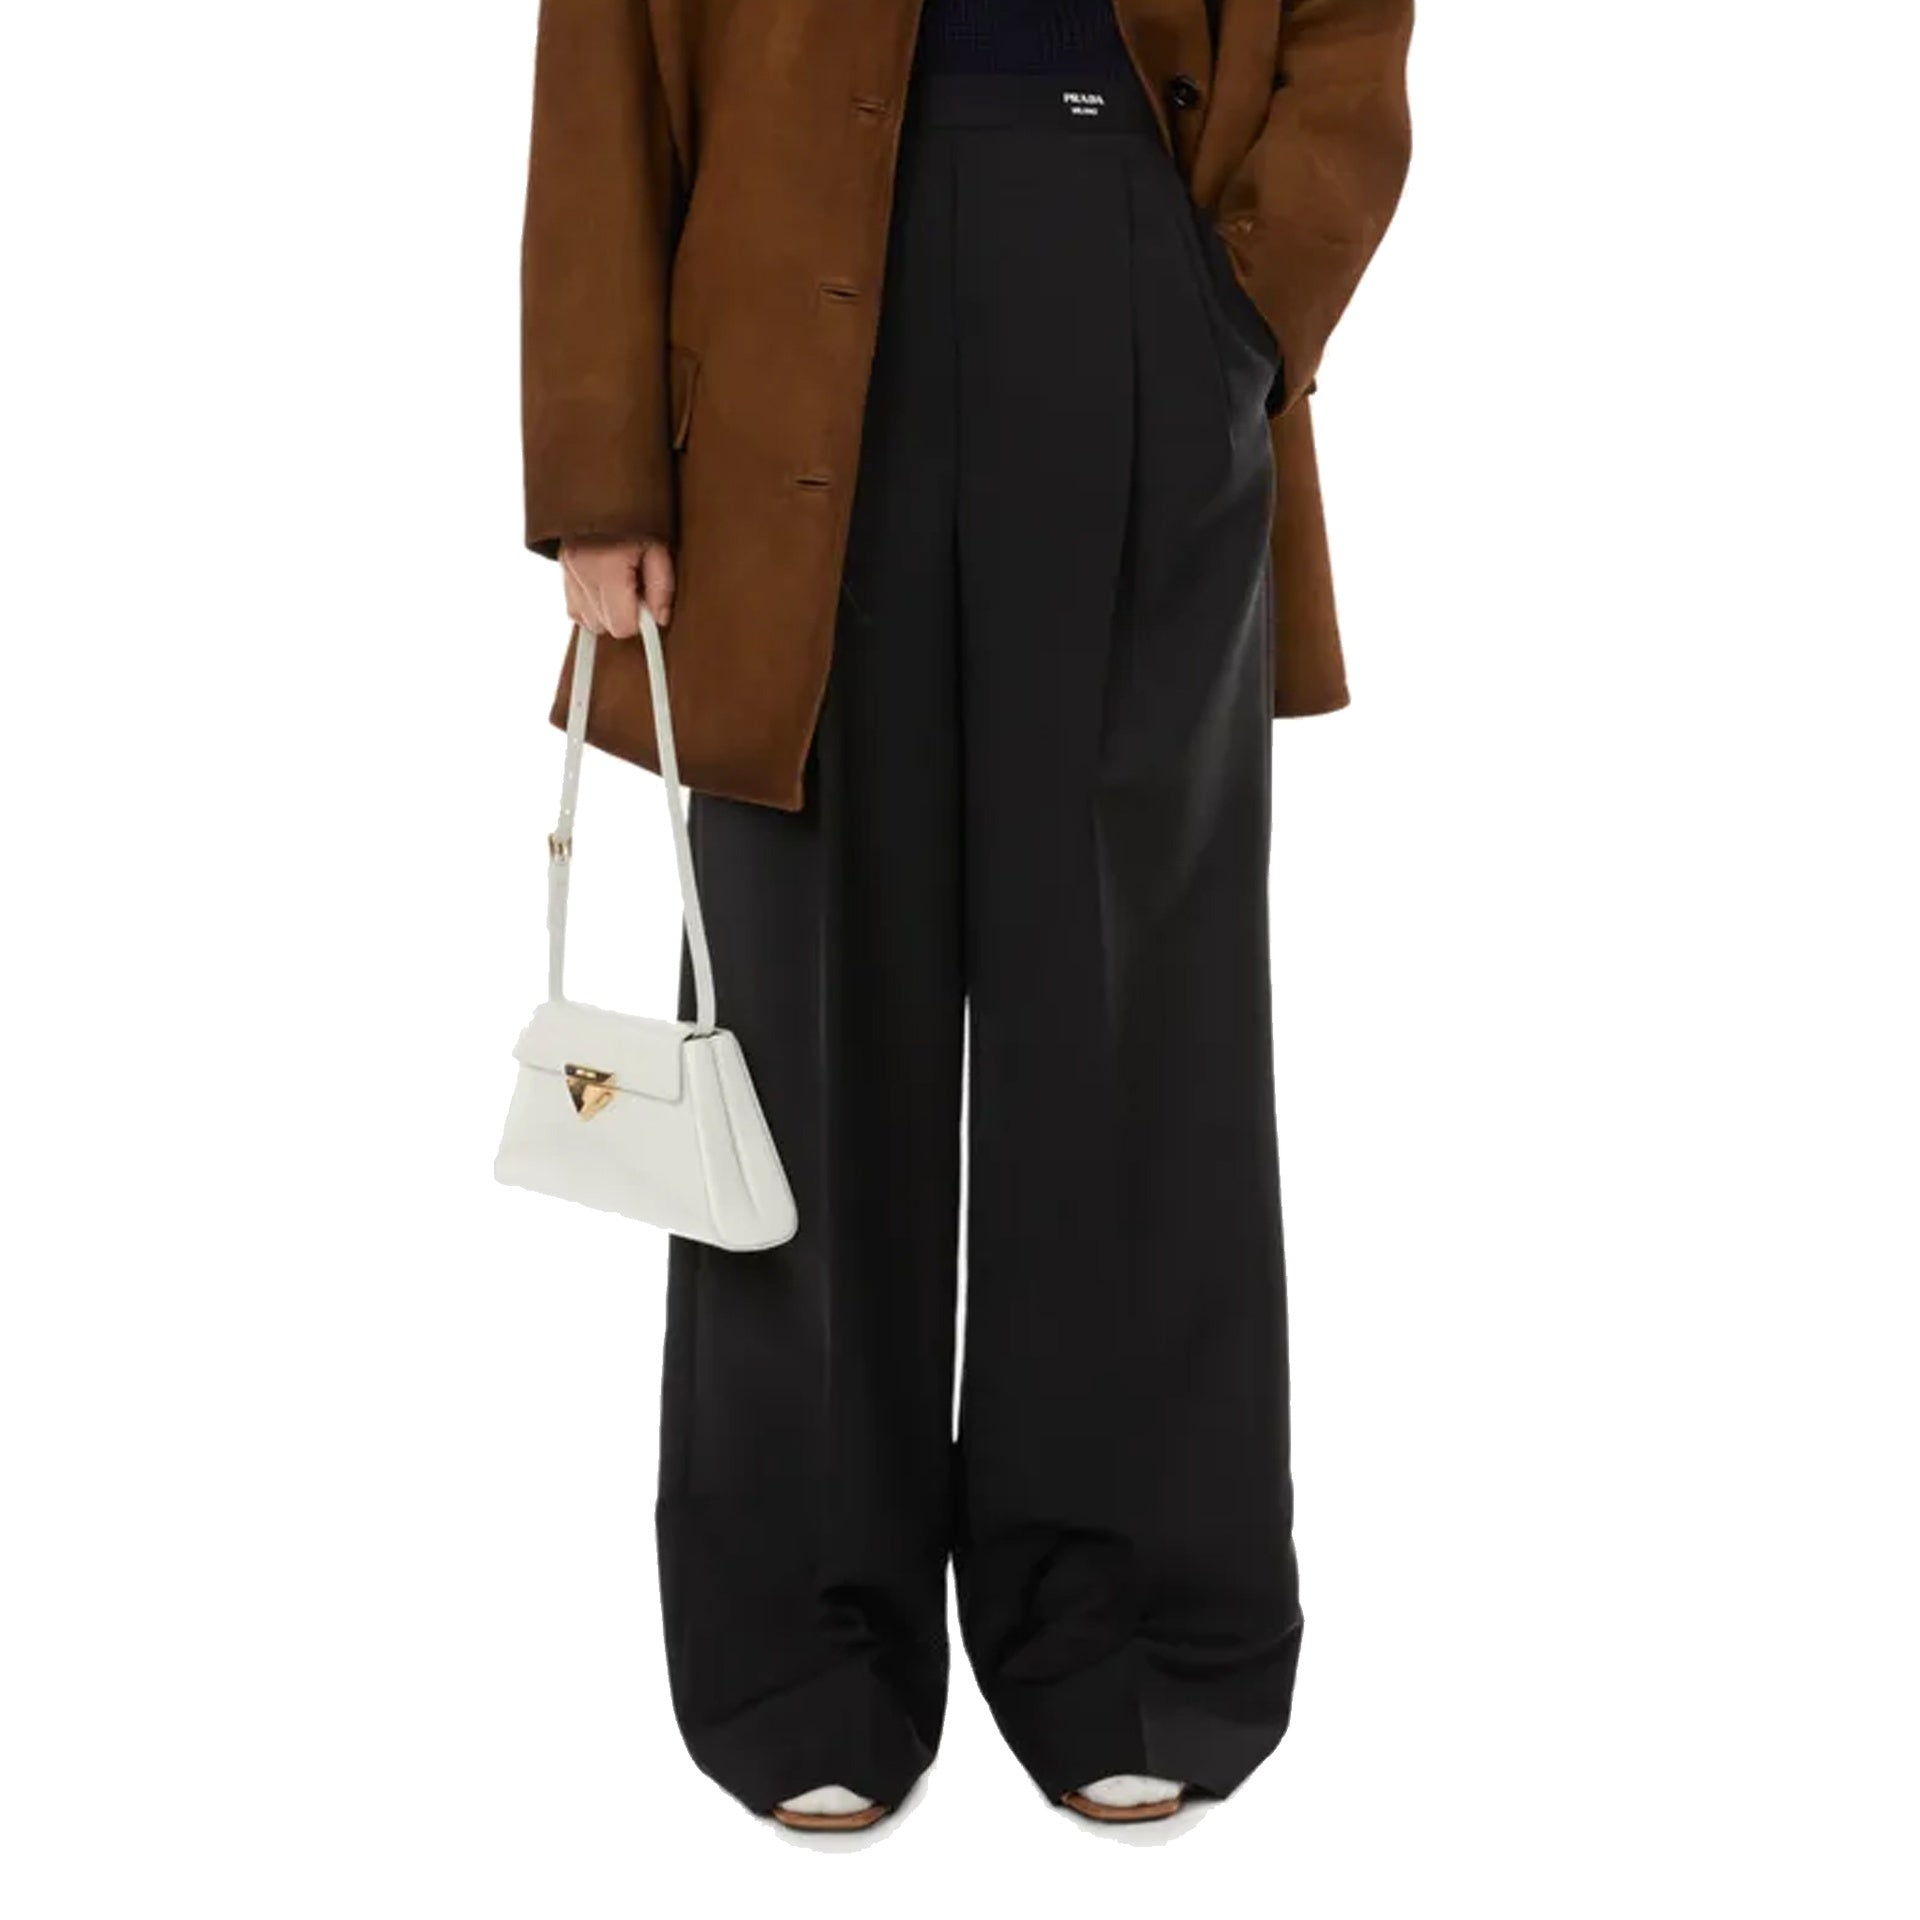 PRADA-Outlet-Sale-Prada Mohair and Wool Pants-WOMEN CLOTHING-BLACK-42-ARCHIVIST